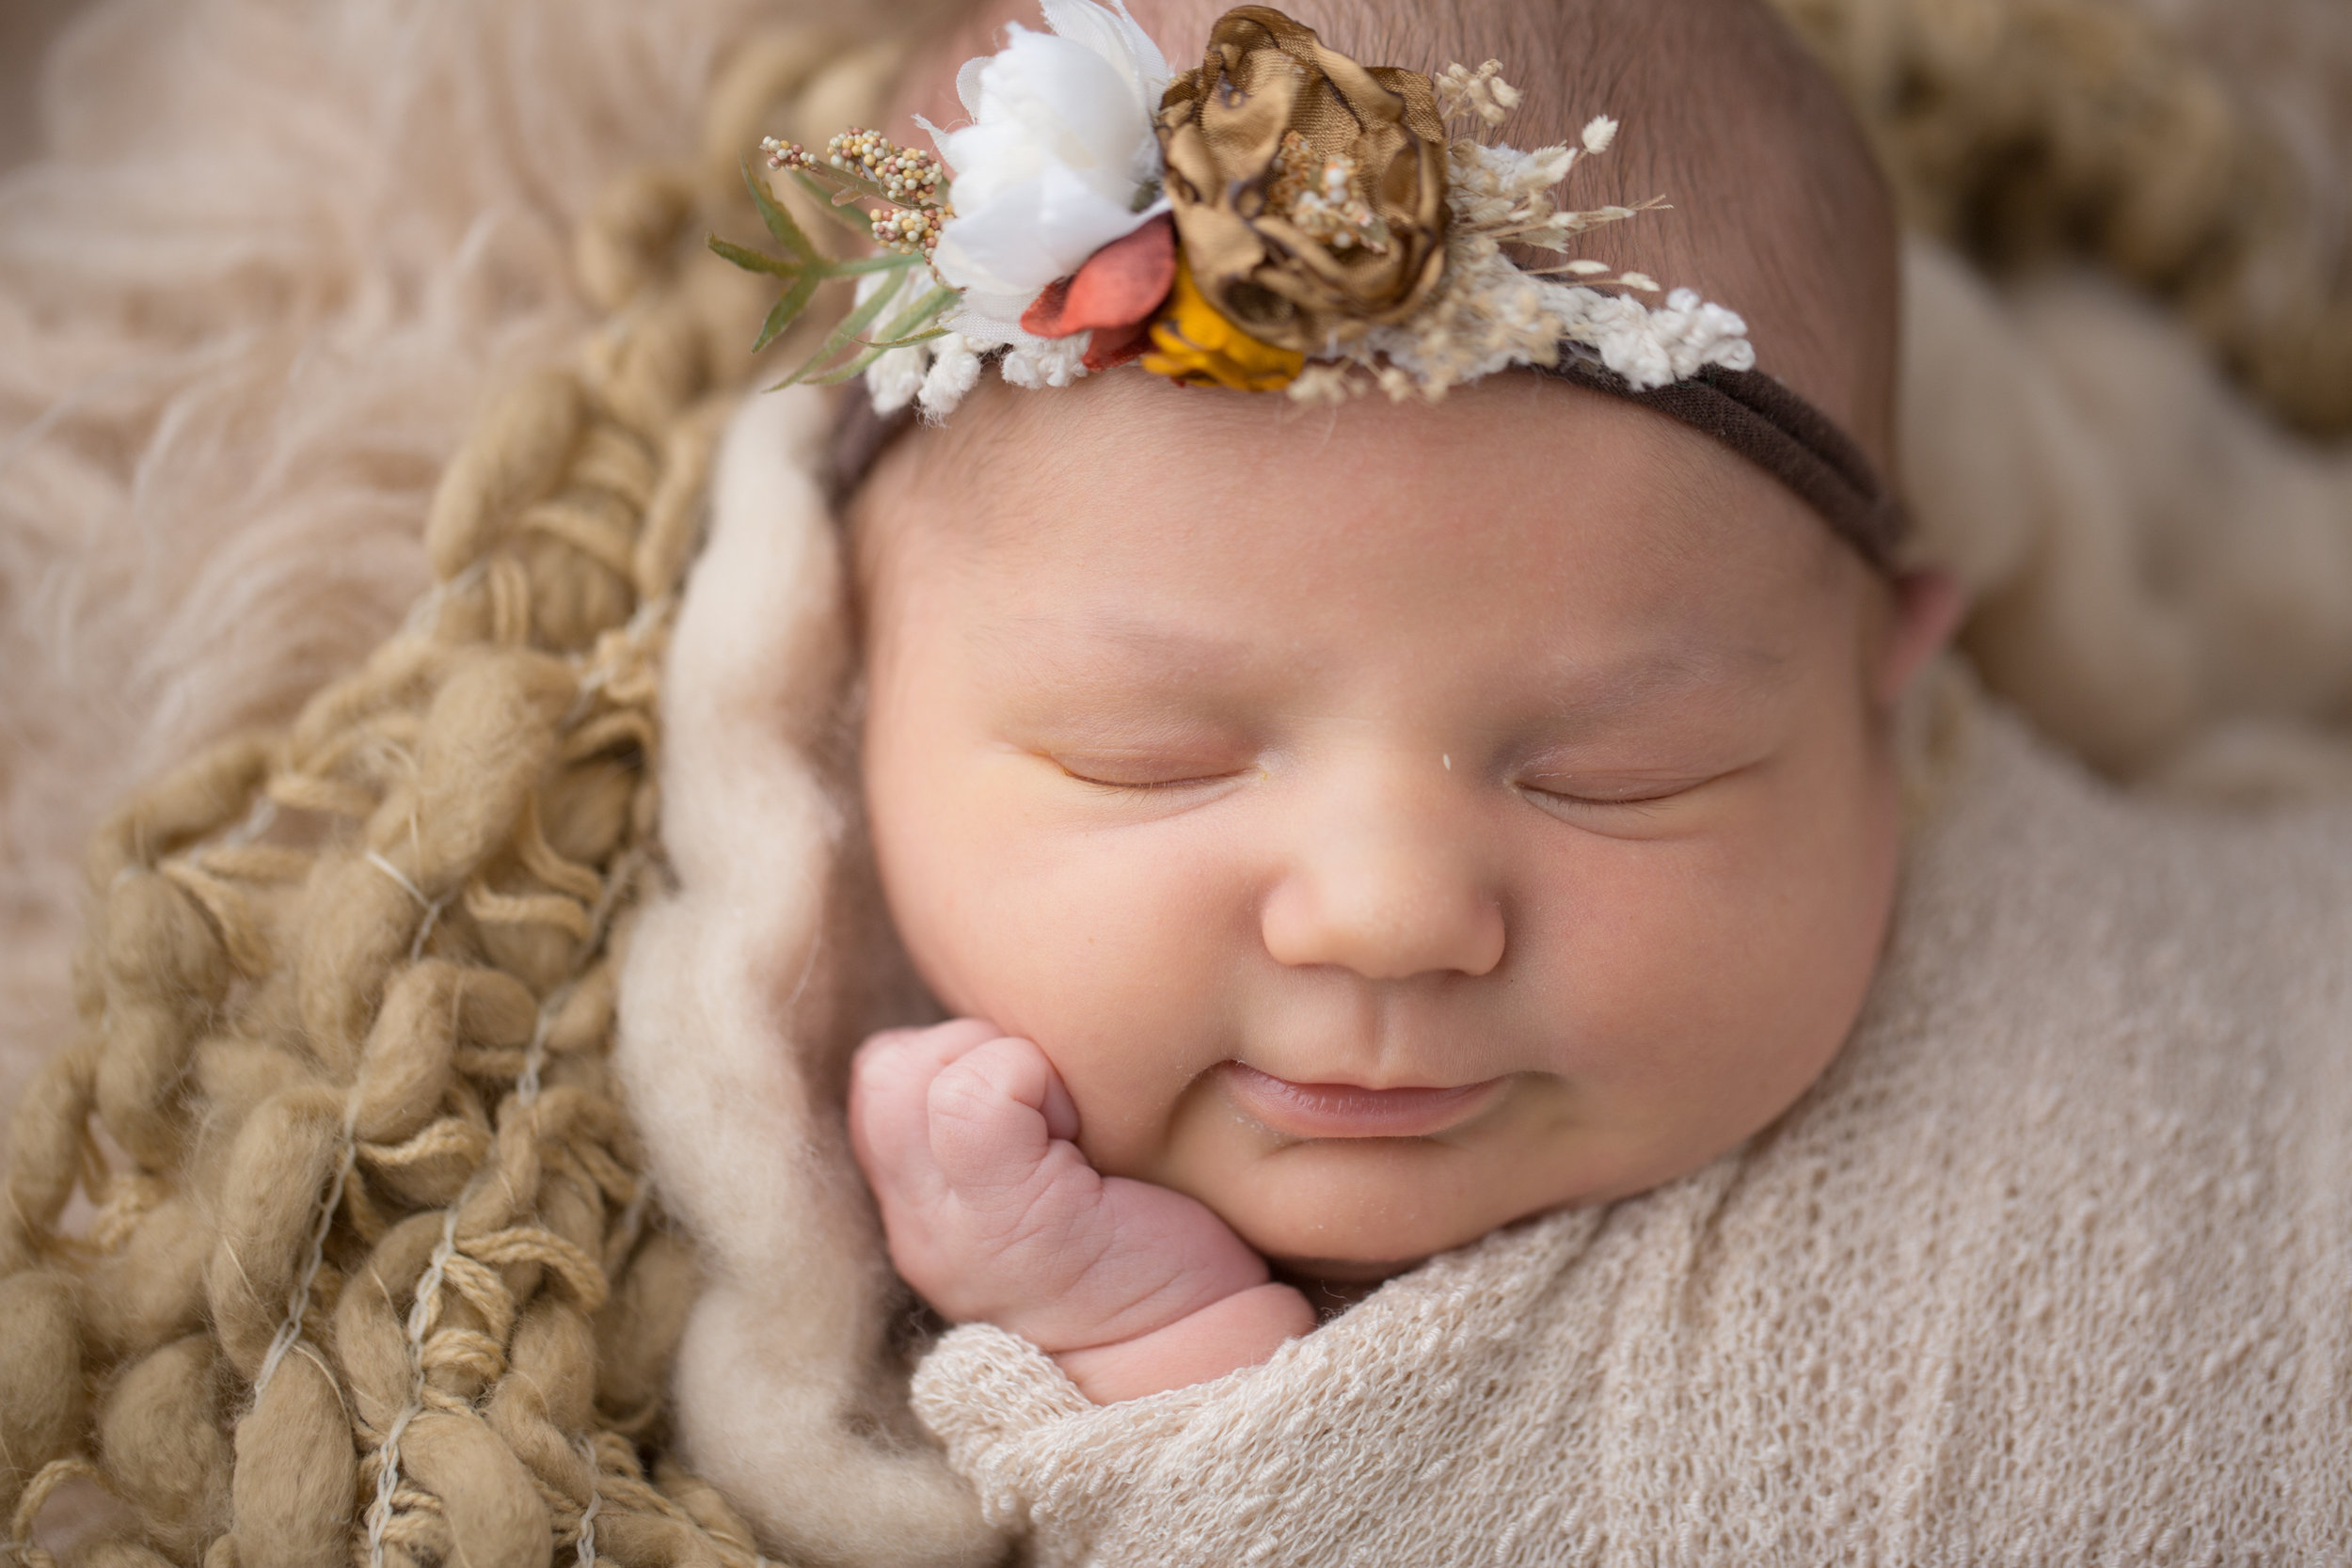  Cute baby girl with chunky cheeks in newborn photos 